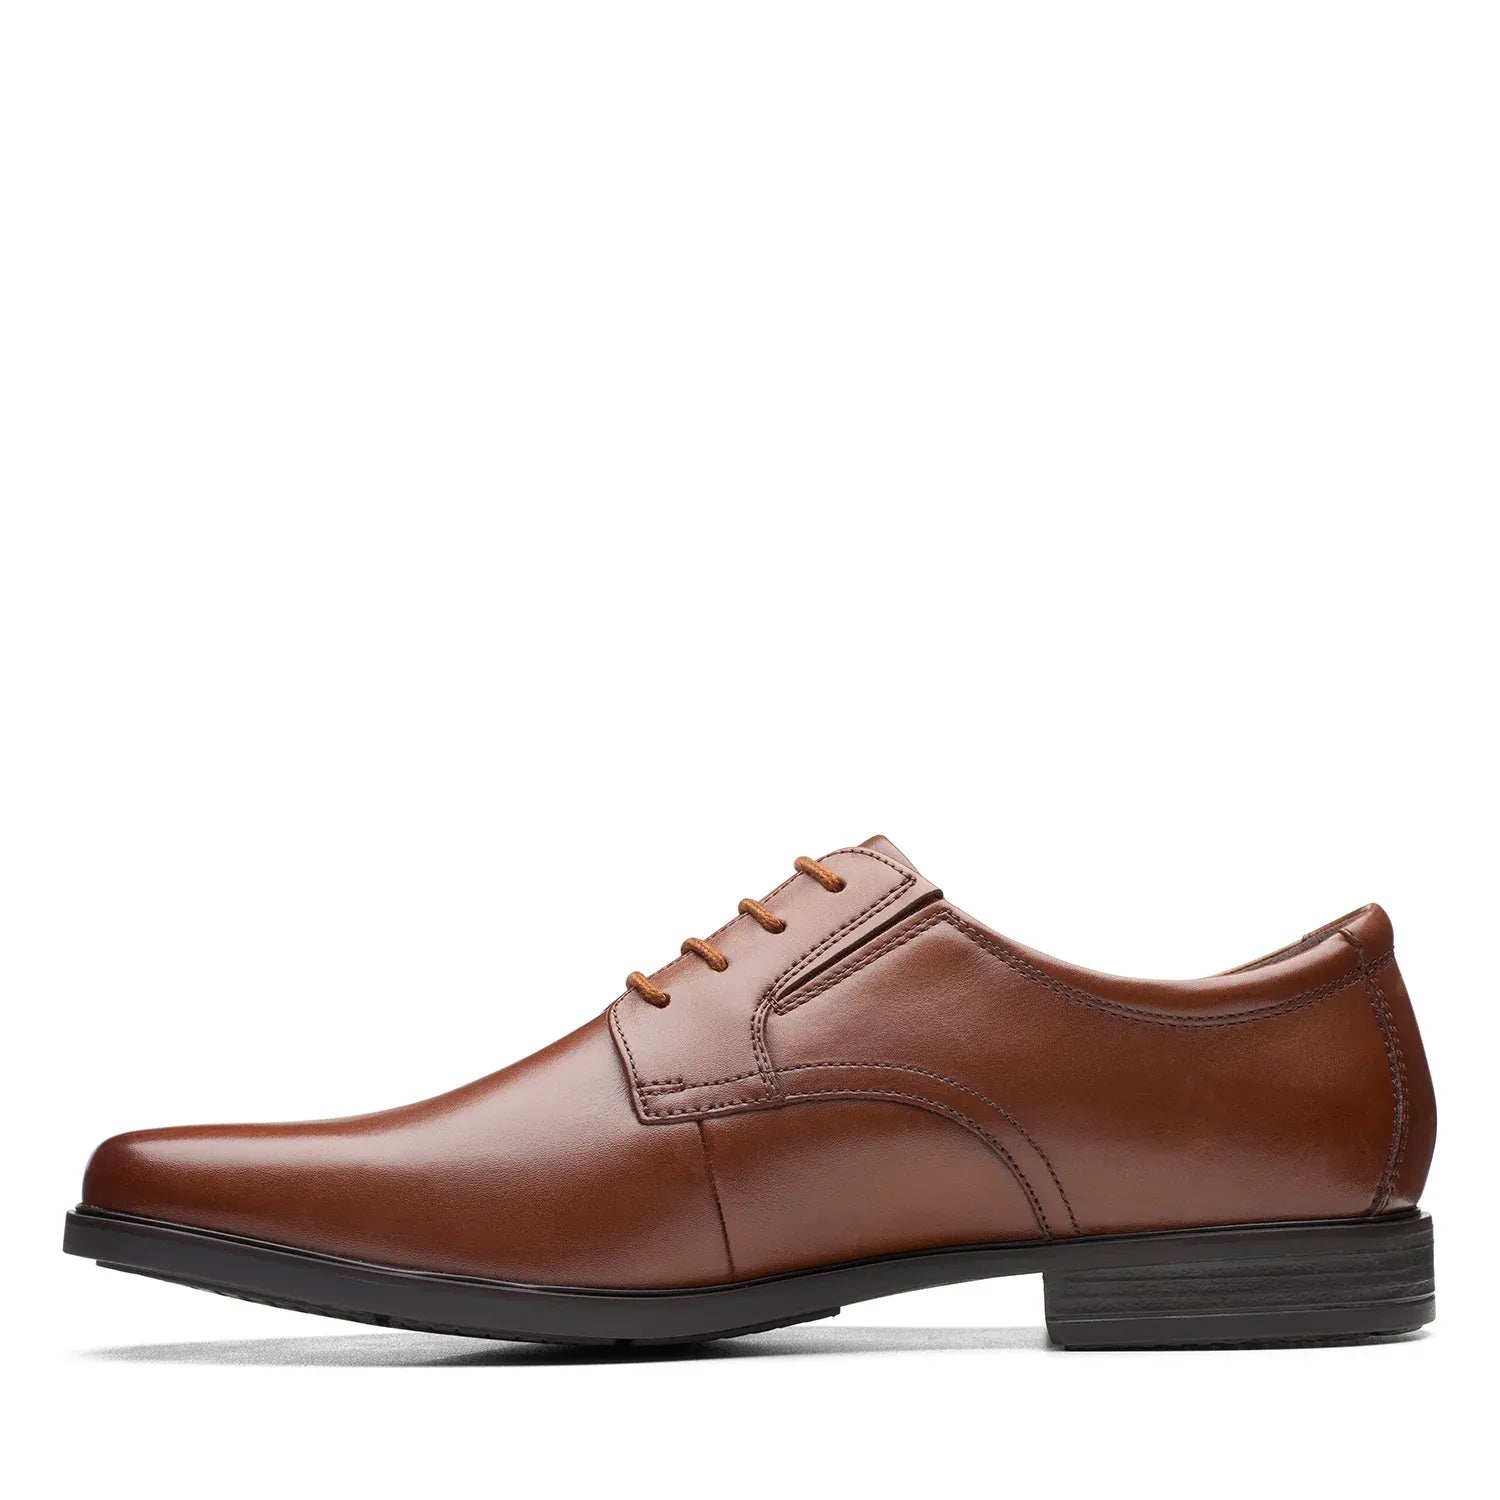 Clarks Howard Walk Dark Tan Leather Shoes for Men - Sophisticated Men's Footwear